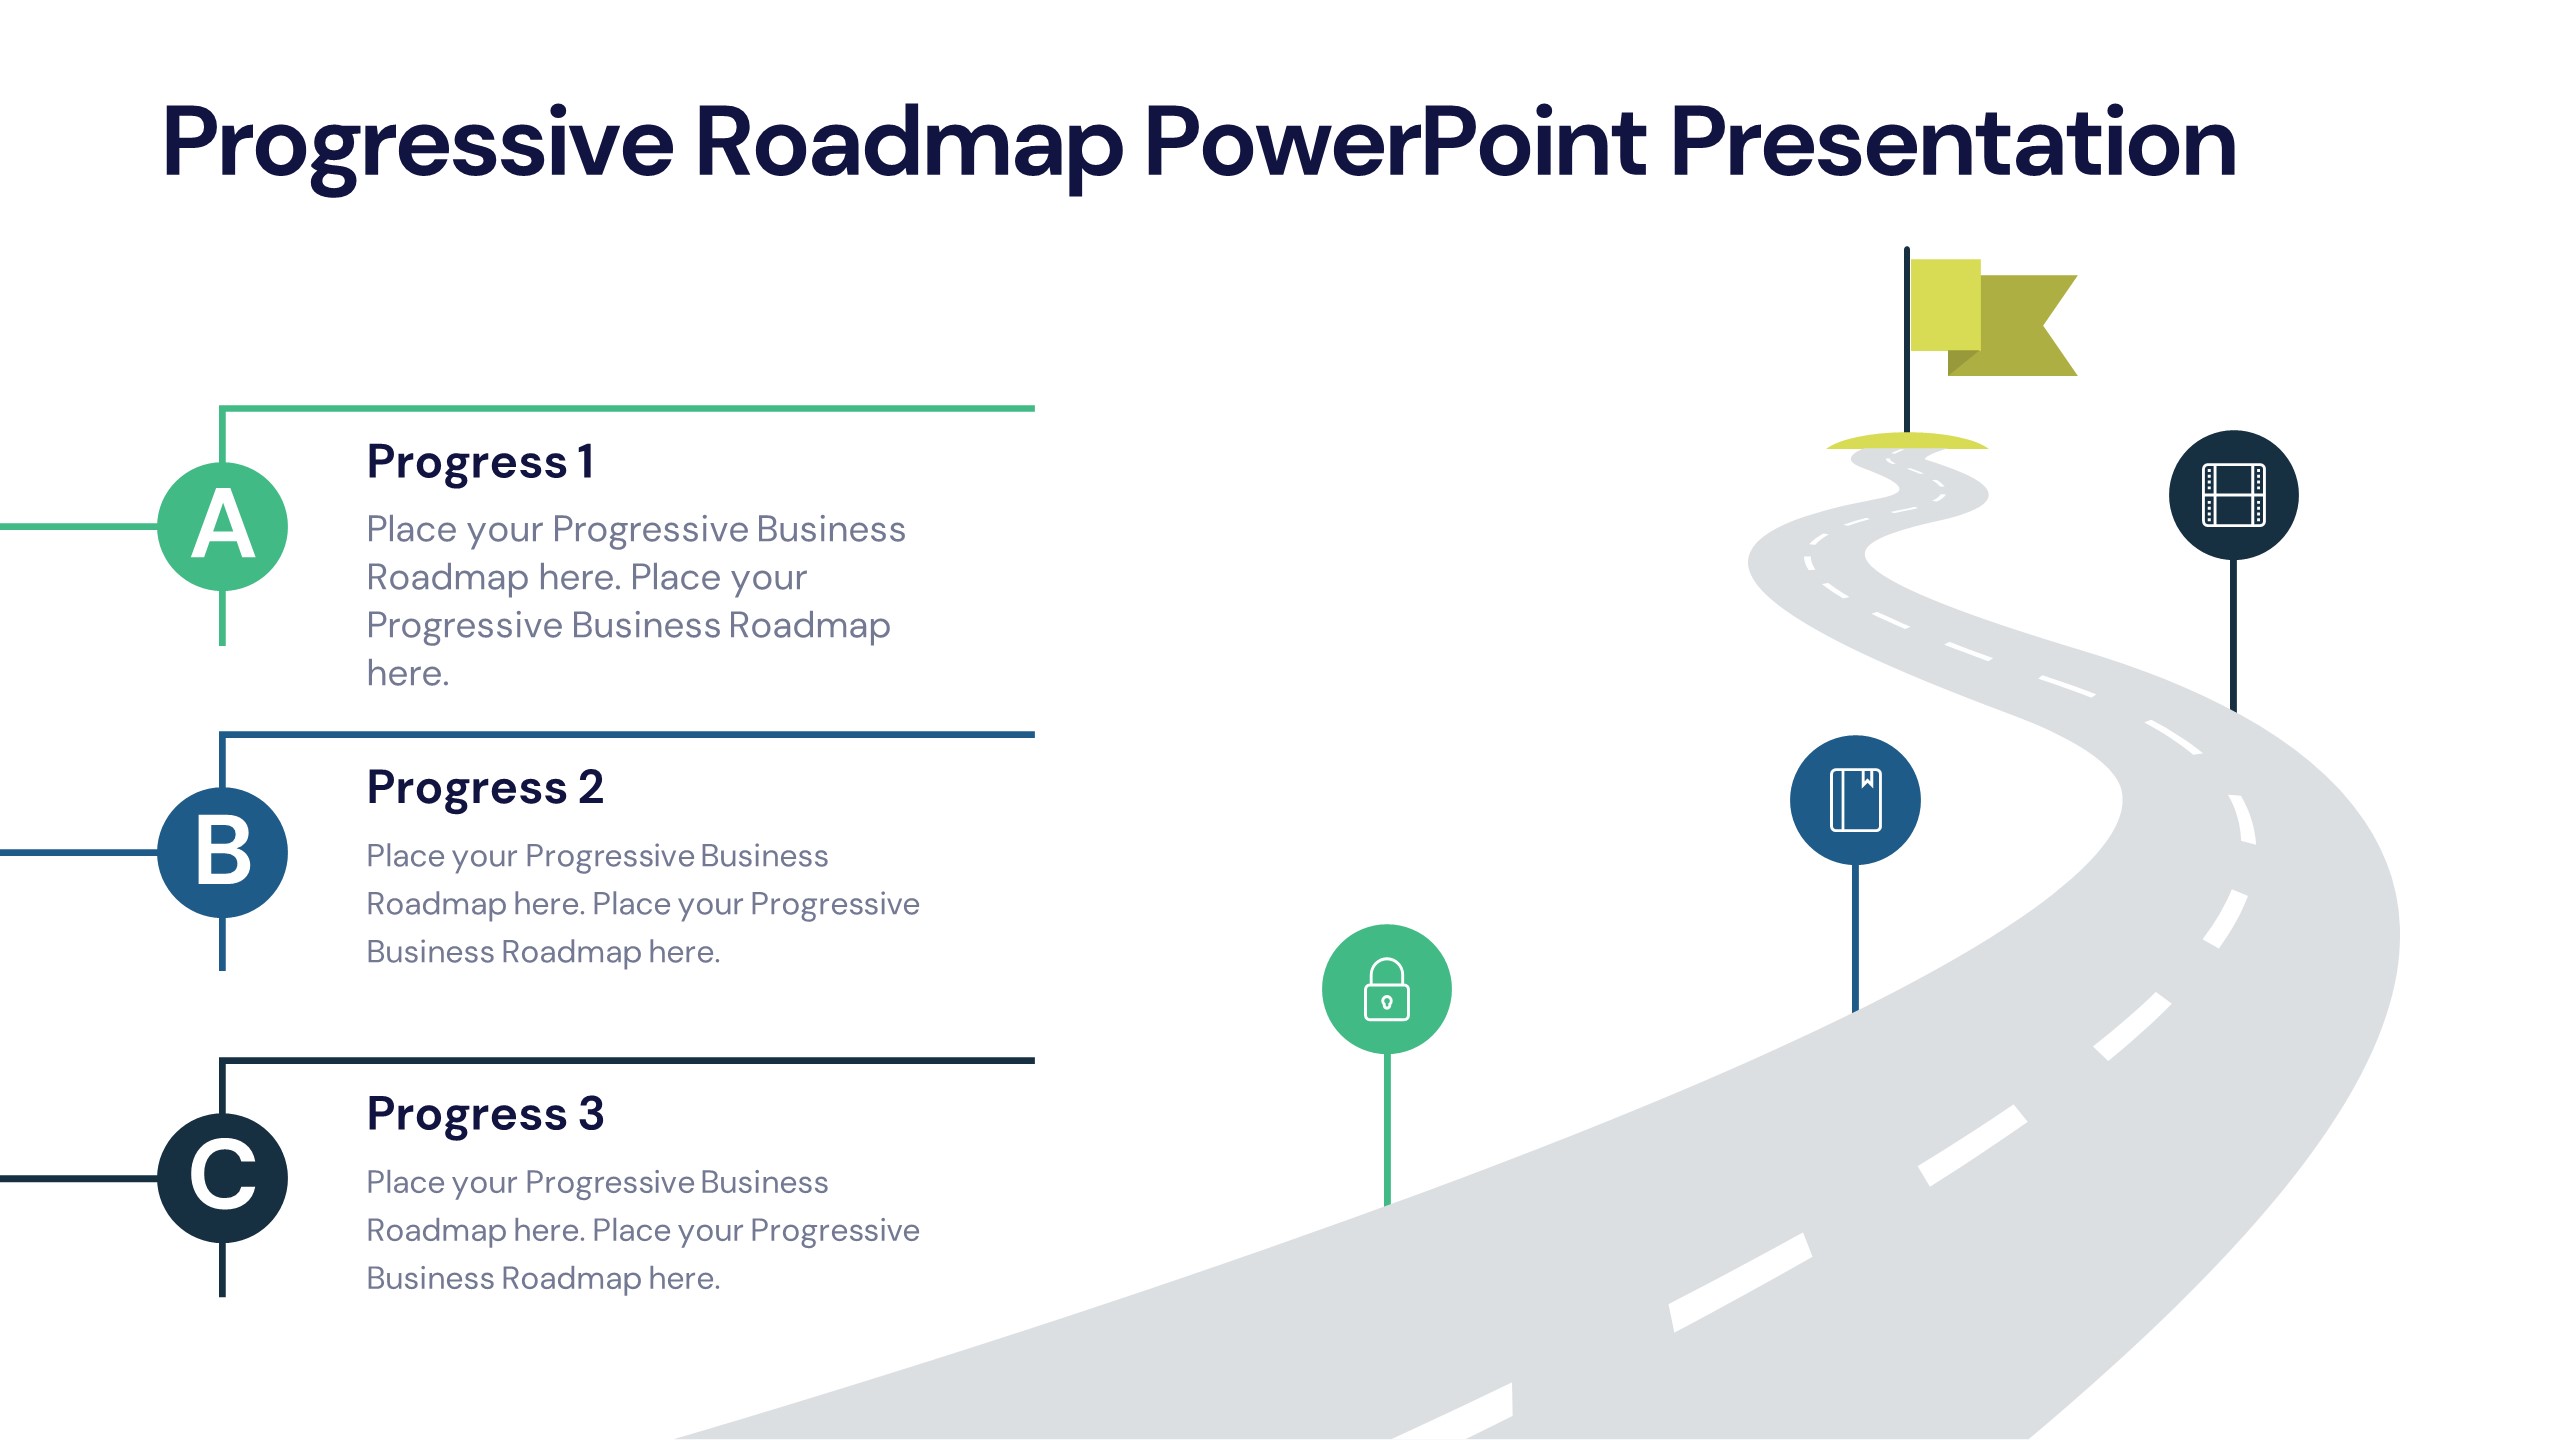 Progressive Roadmap PowerPoint Presentation